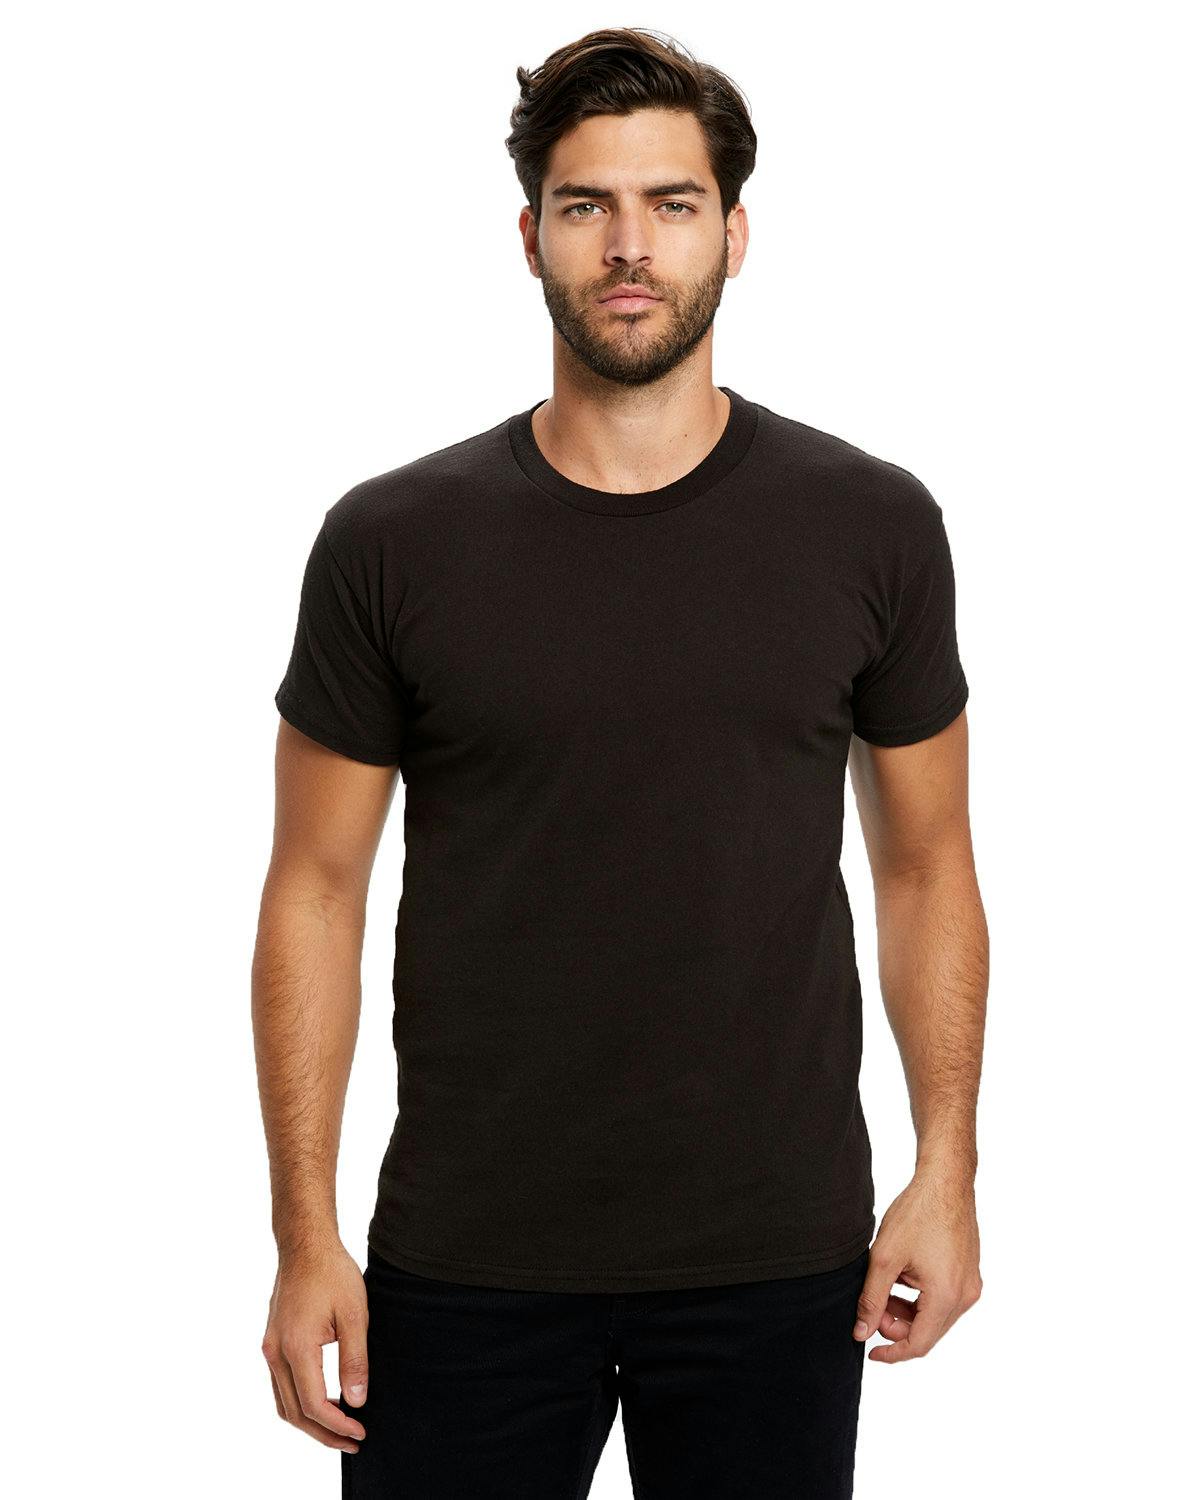 Image for Men's Vintage Fit Heavyweight Cotton T-Shirt